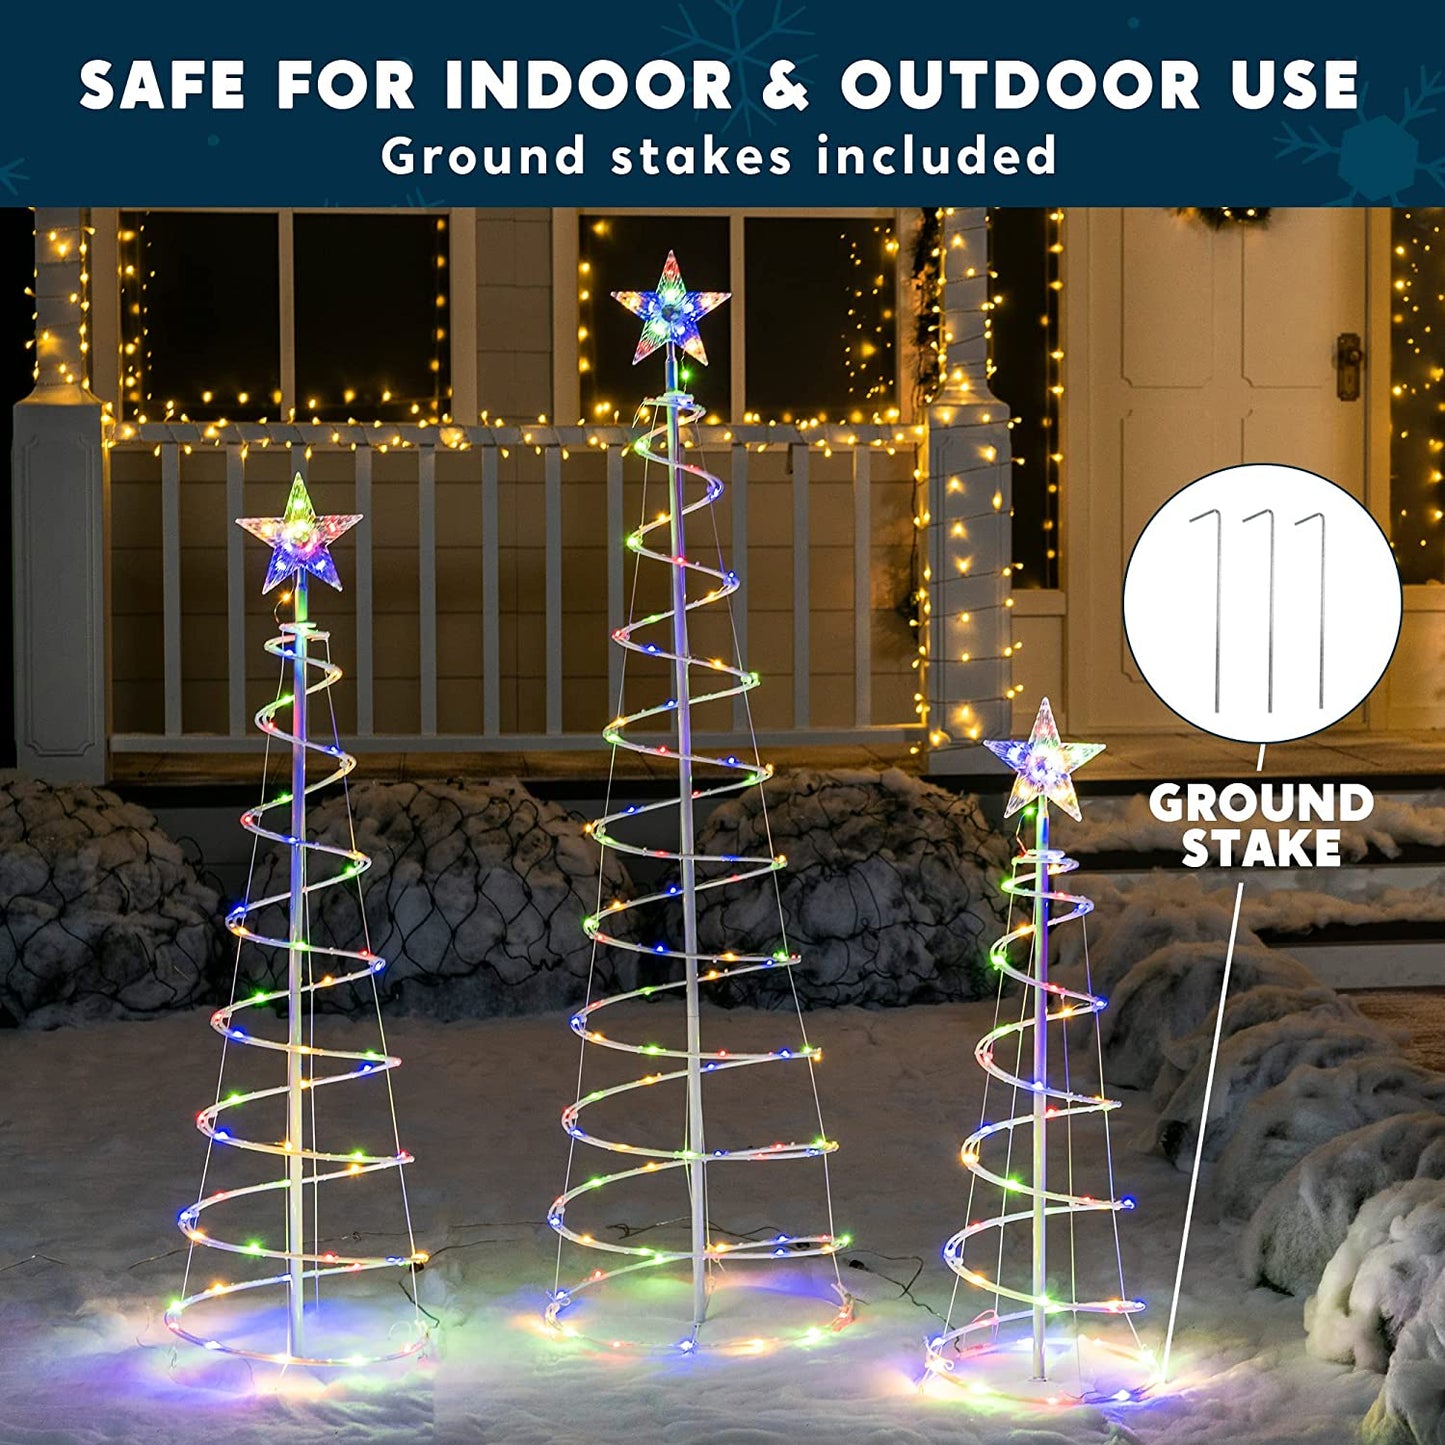 Lighted Spiral Christmas Tree Set LED Warm White - 3 Pcs